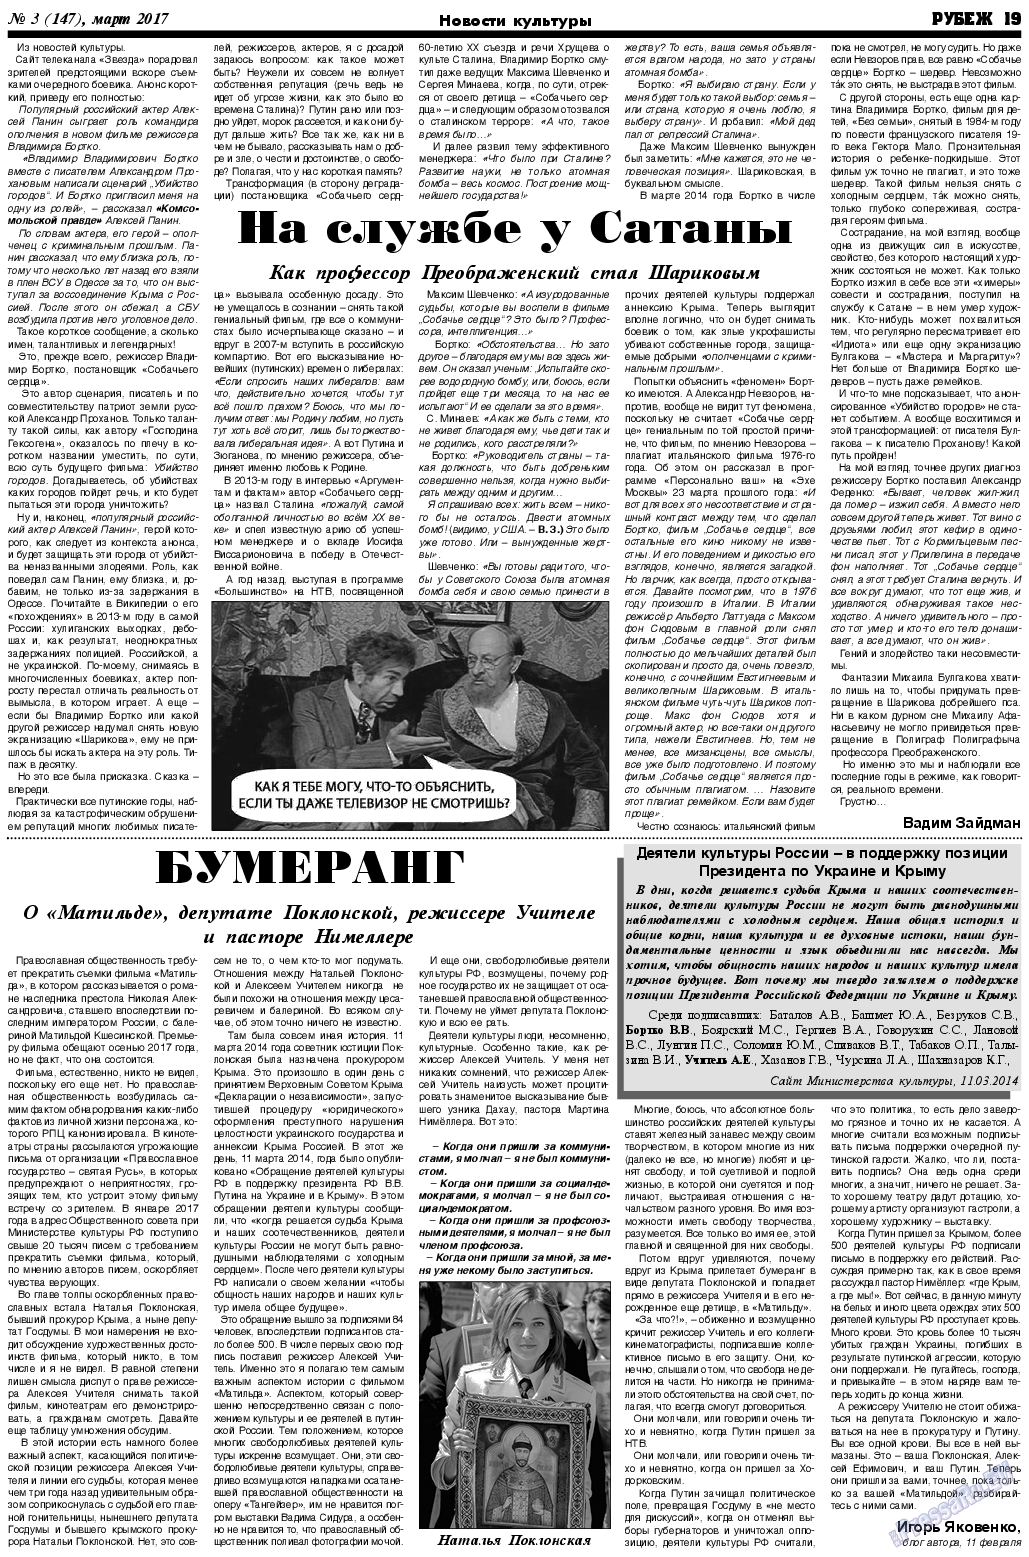 Рубеж, газета. 2017 №3 стр.19